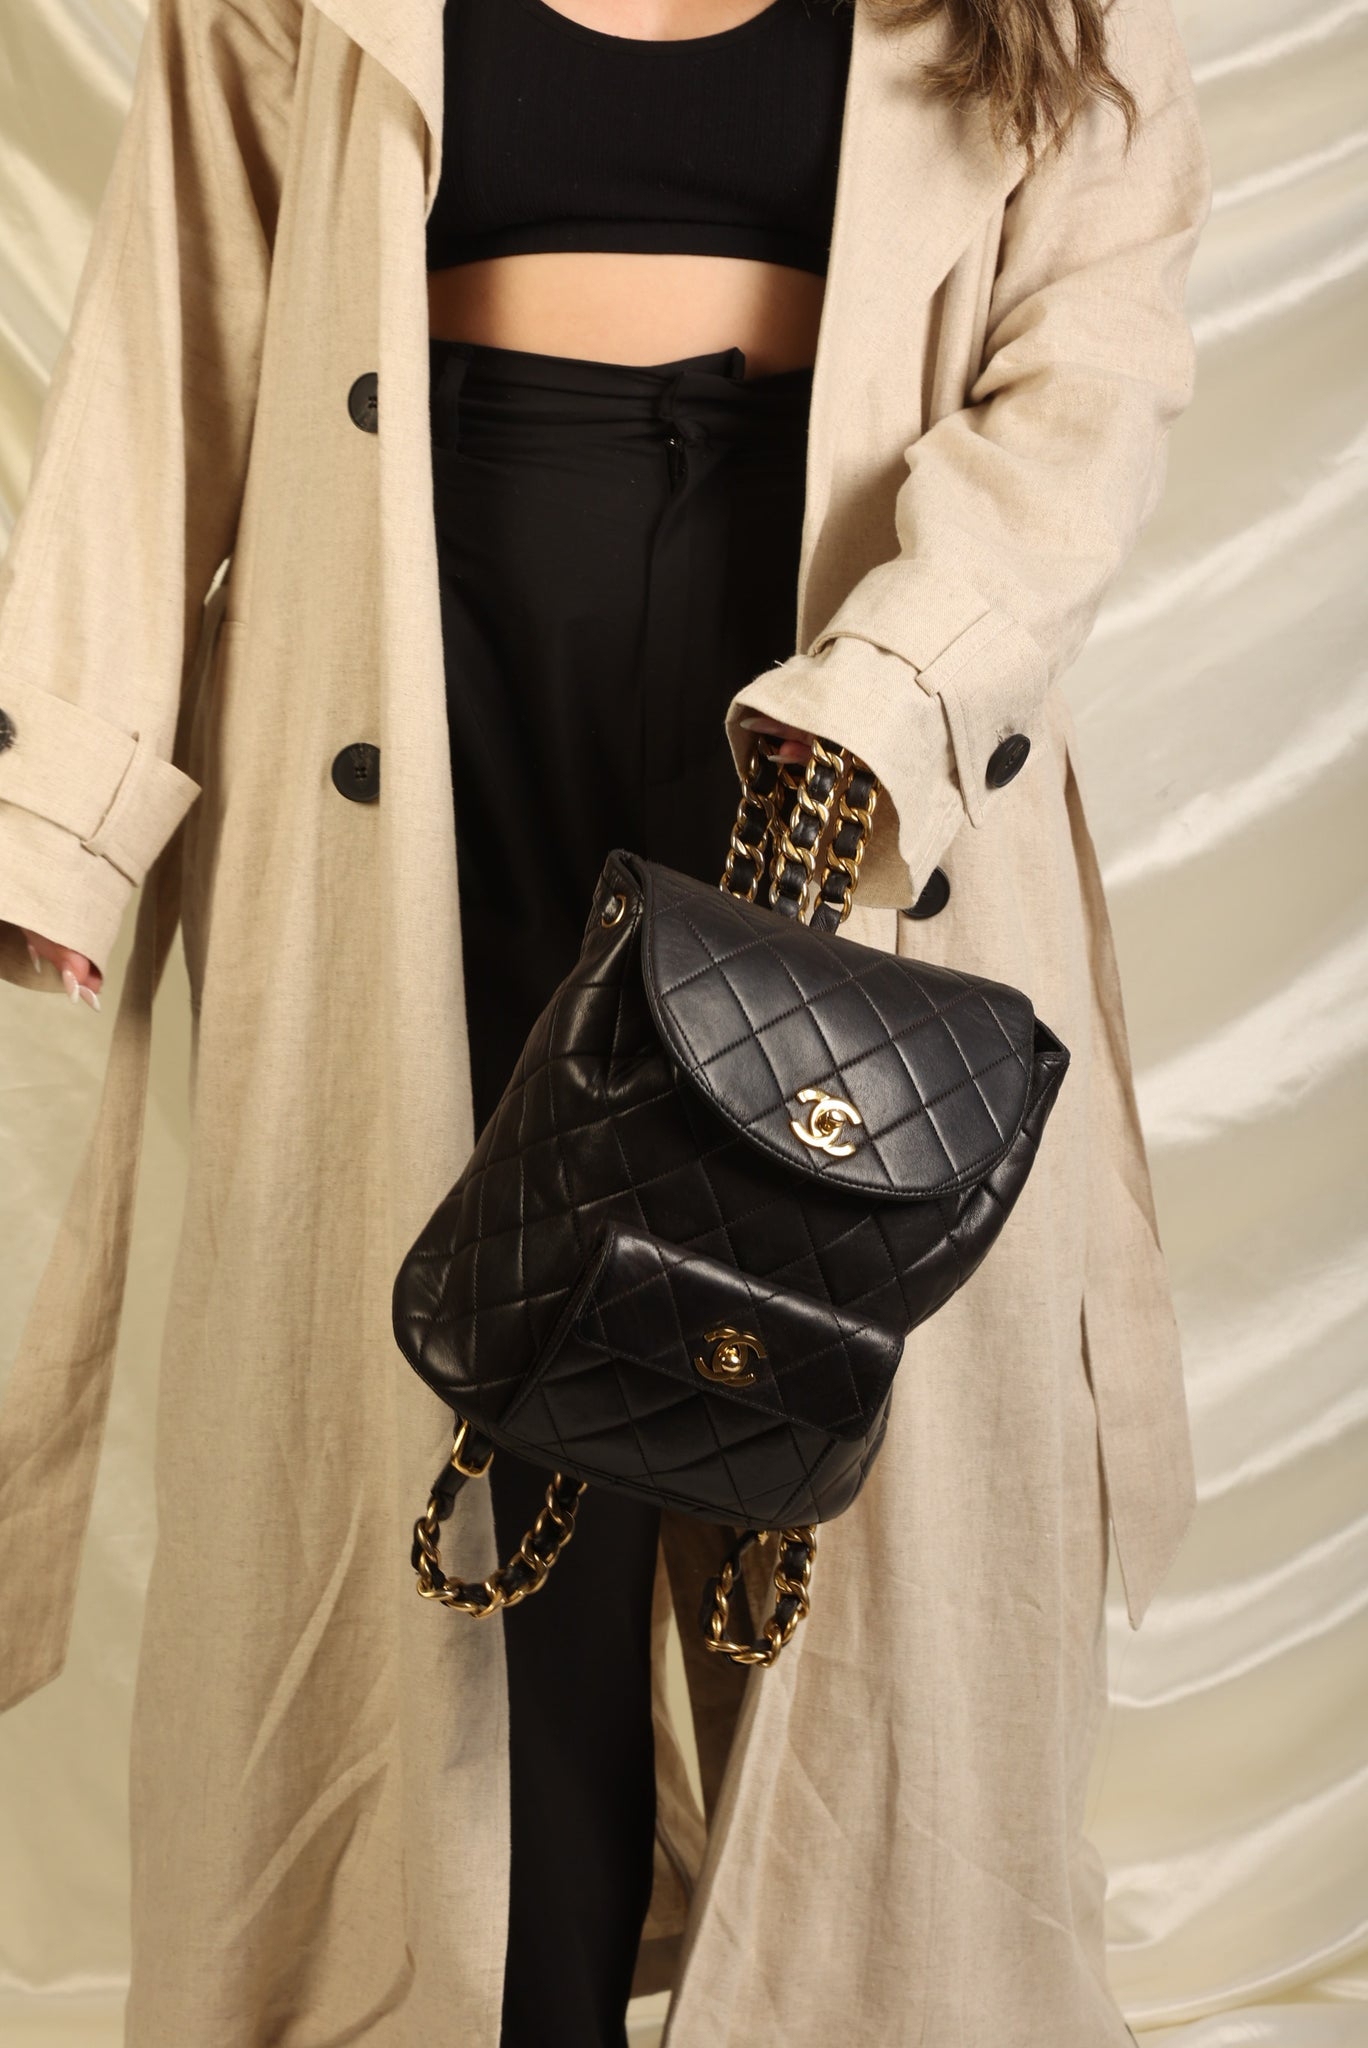 Chanel Black Leather Mademoiselle Turn Lock Flap Bag Chanel